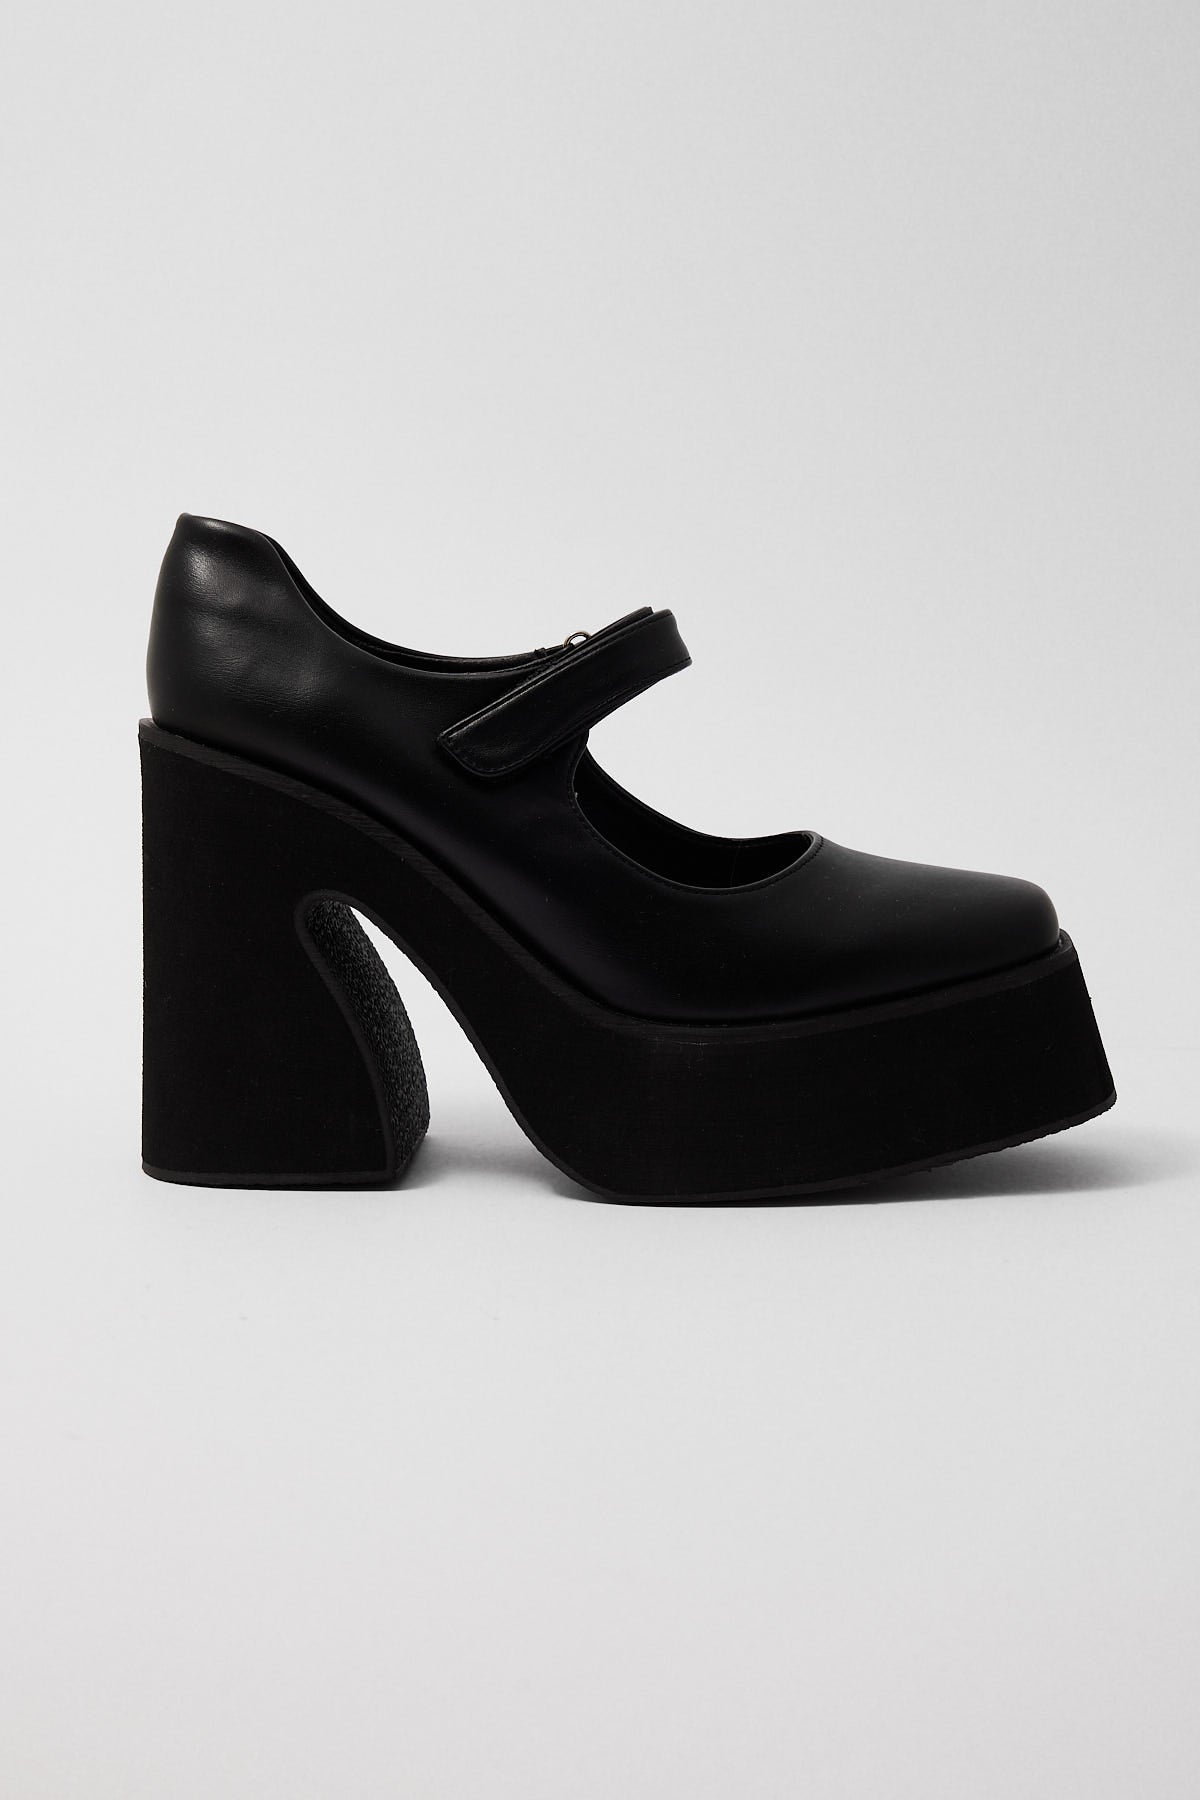 Koi Ambrosia Black Heeled Shoes Black